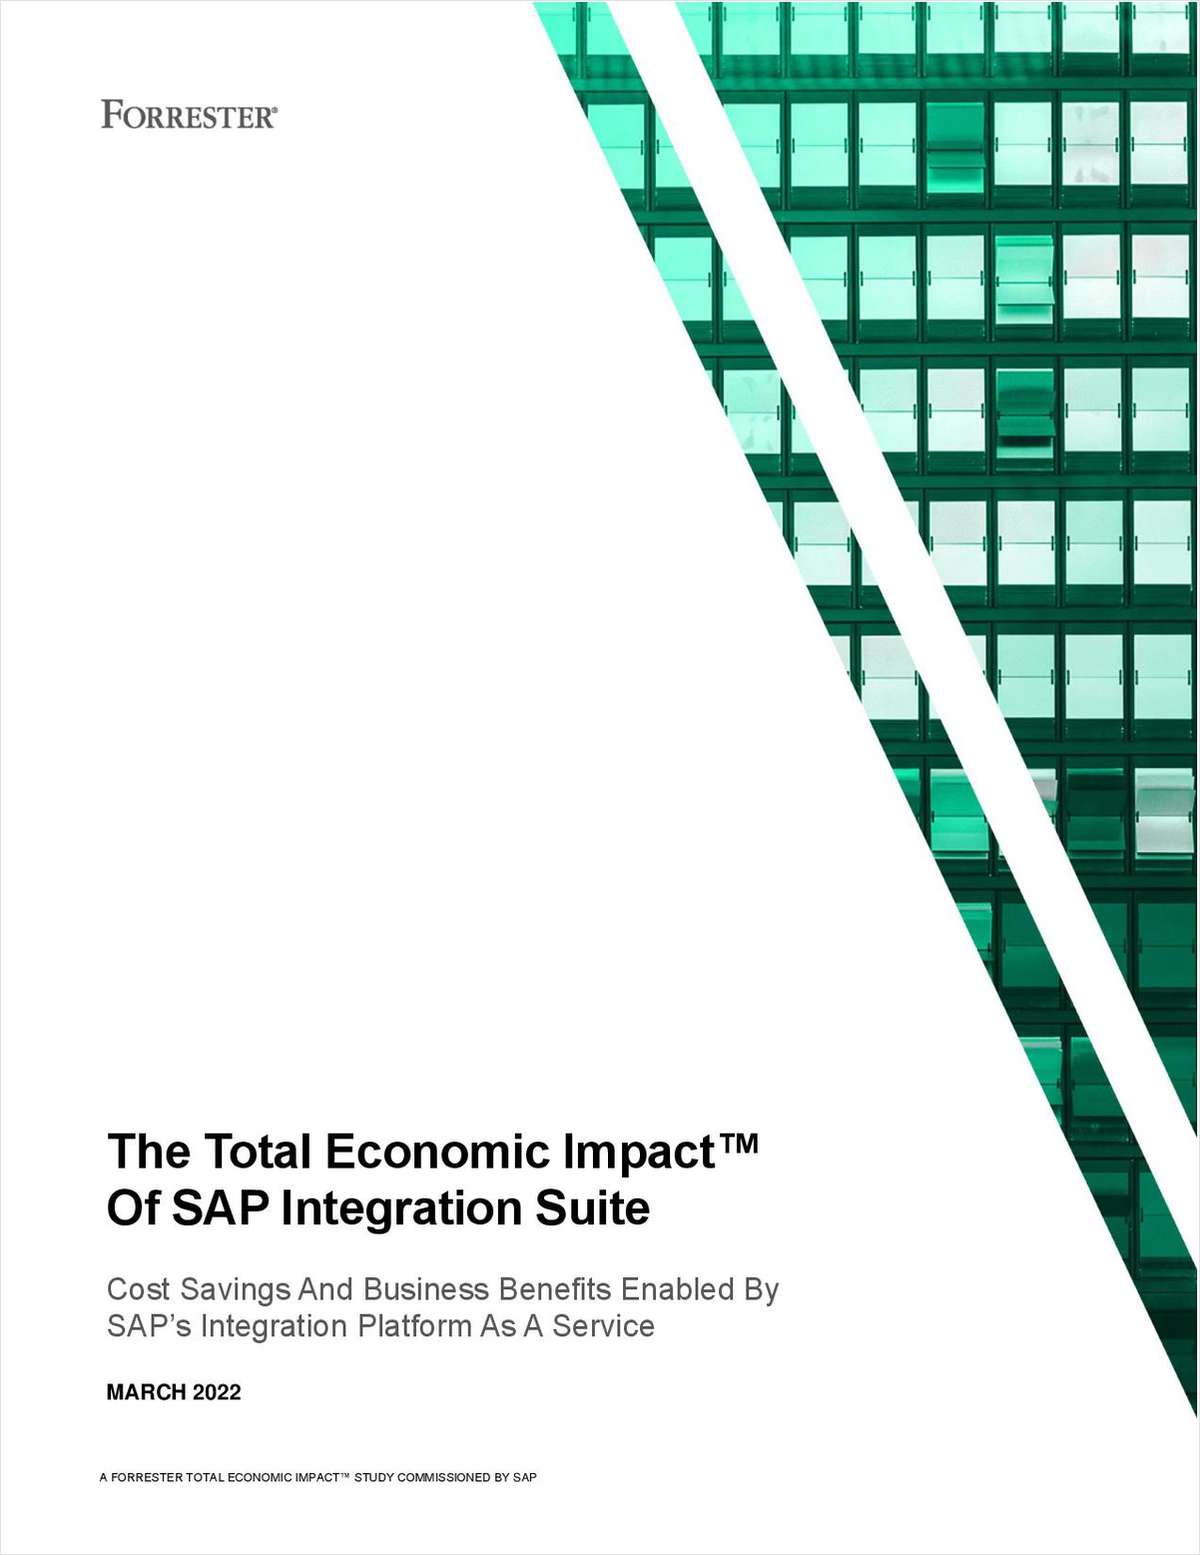 Forrester Total Economic Impact of SAP Integration Suite